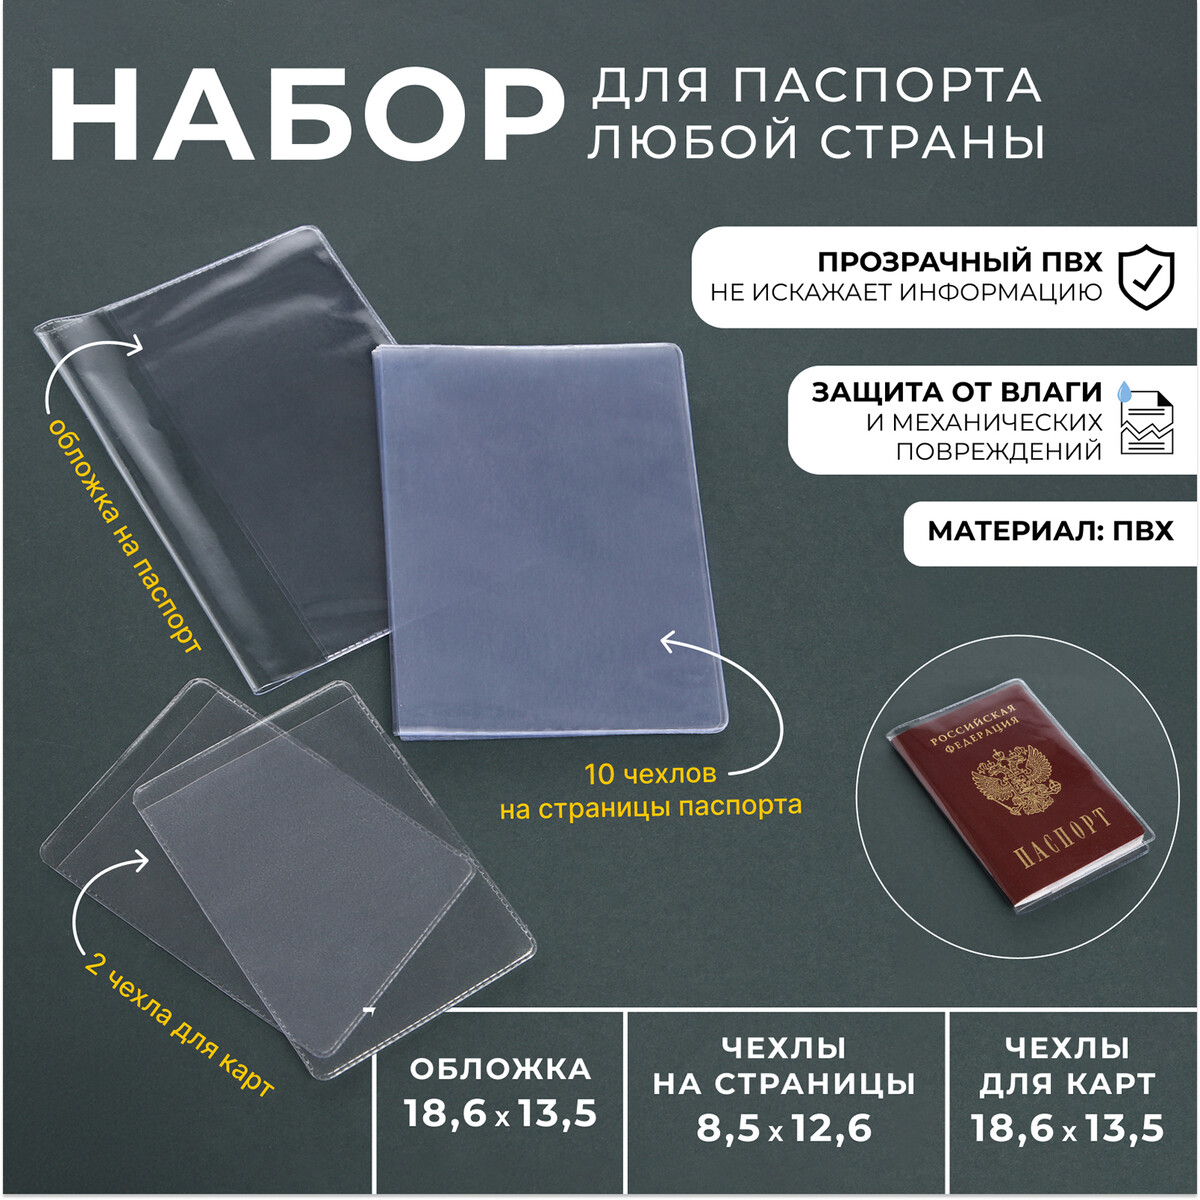 Набор для паспорта: обложка на паспорт; 10 чехлов на страницы паспорта, 2 чехла для карт, цвет прозрачный обложка для паспорта басик и зачем паспорт пвх бокс 12 999 27 547